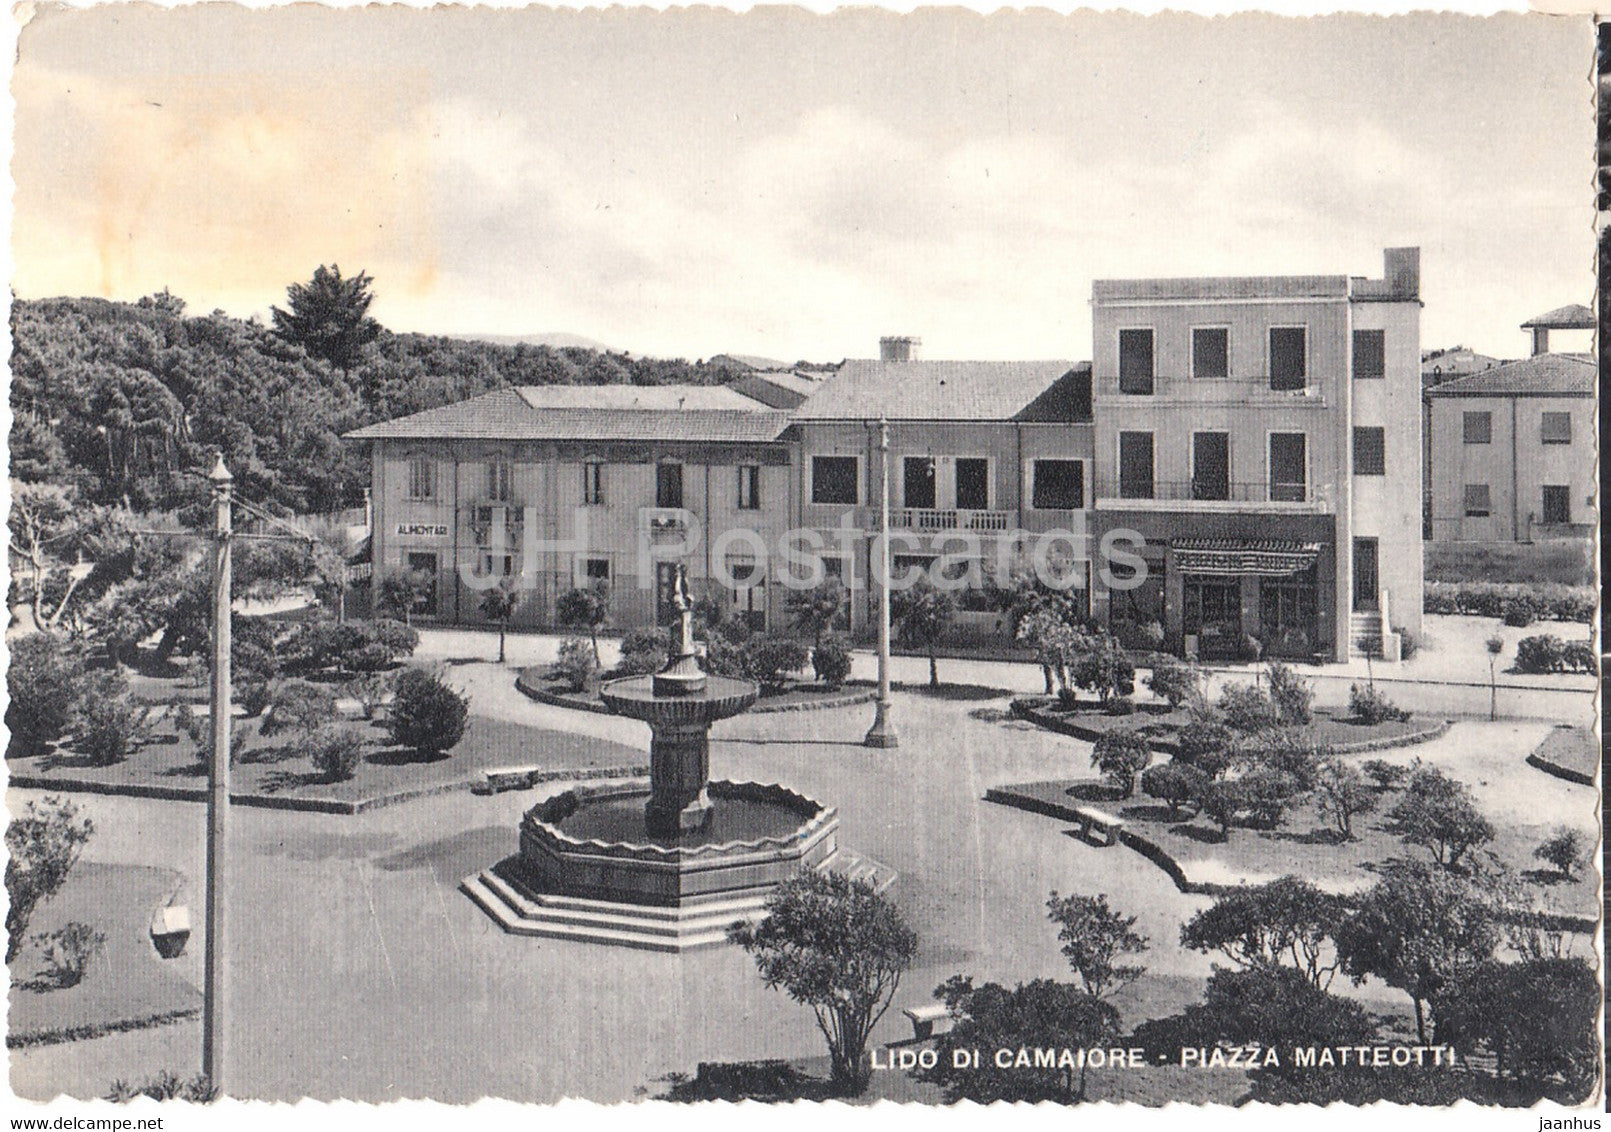 Lido di Camaiore - Piazza Matteotti - square - old postcard - 1951 - Italy - used - JH Postcards